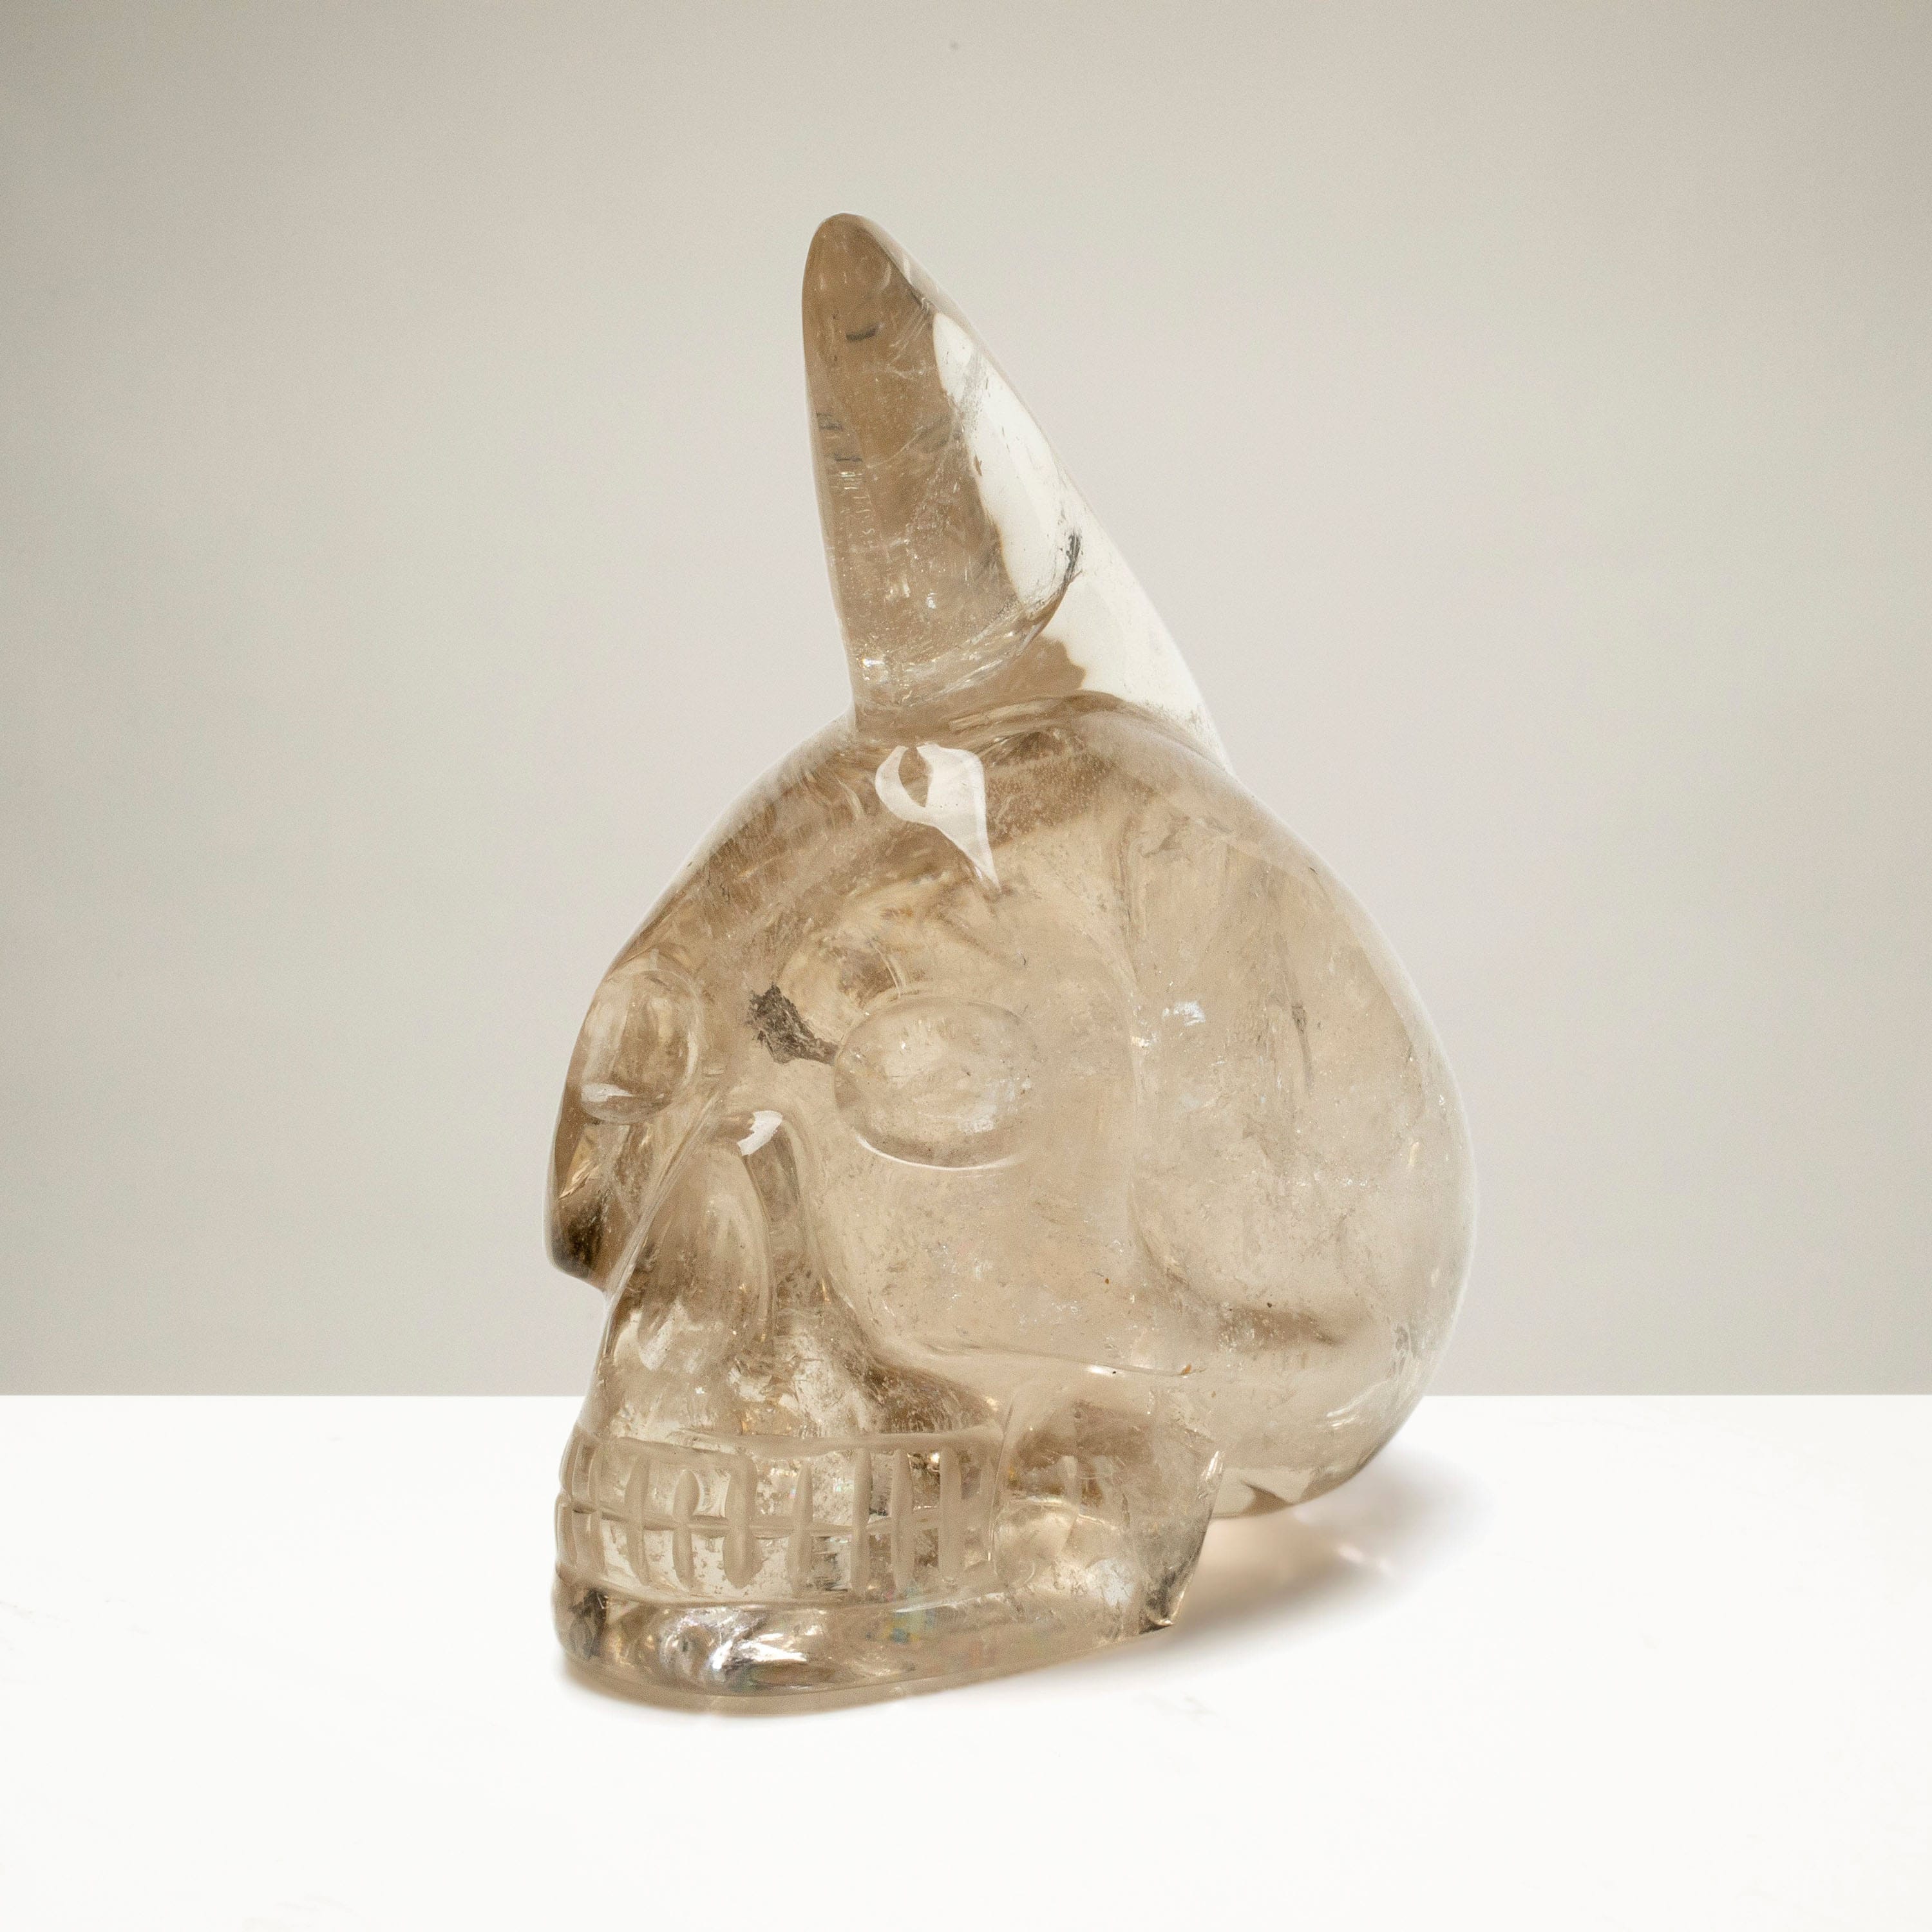 KALIFANO Smoky Quartz Smoky Quartz Skull Carving from Brazil - 5" / 965 grams SK5800.003